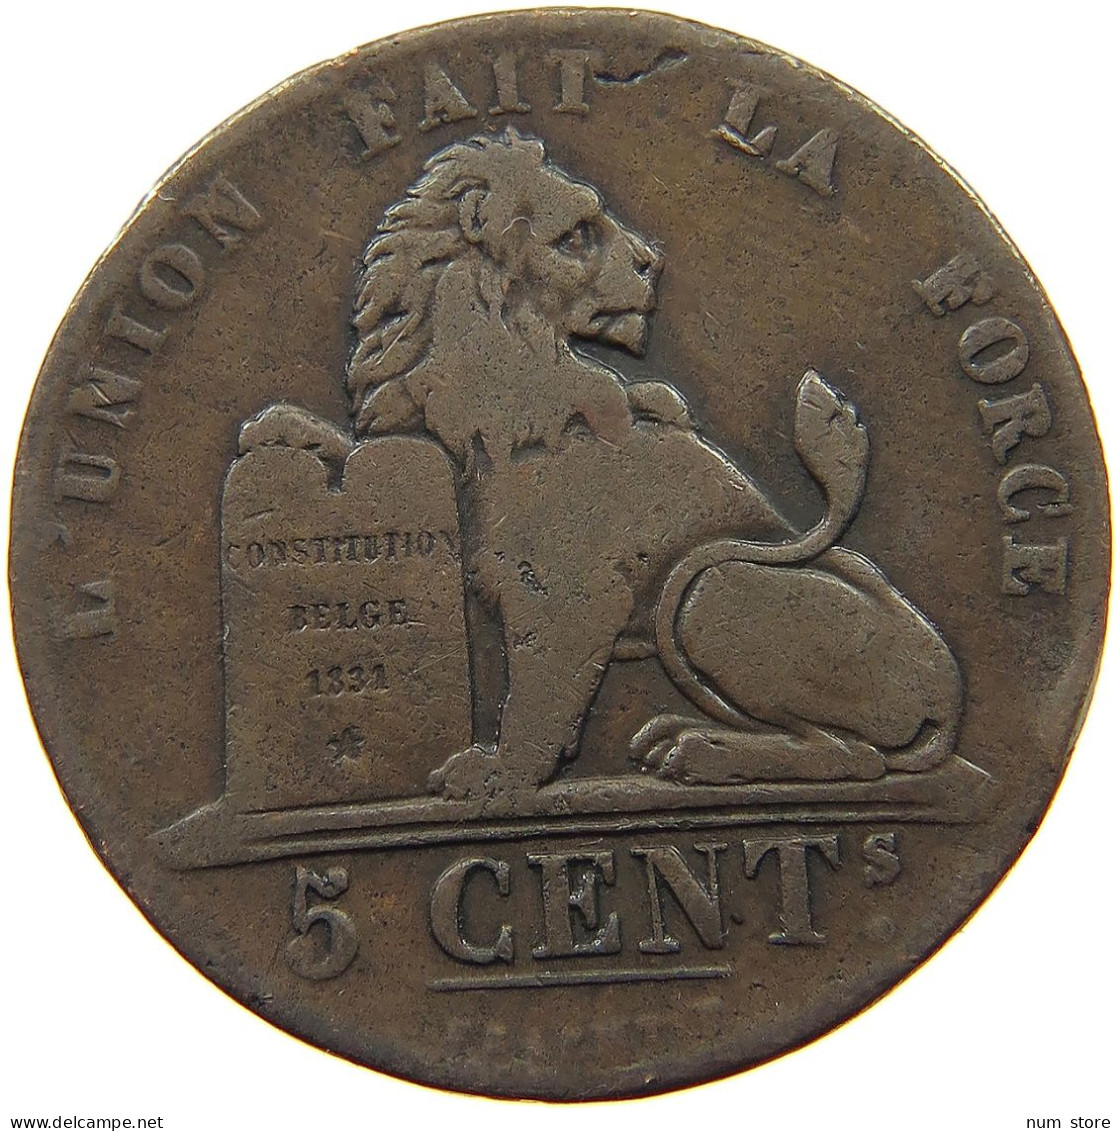 BELGIUM 5 CENTIMES 1842 Leopold I. (1831-1865) #a007 0323 - 5 Cents